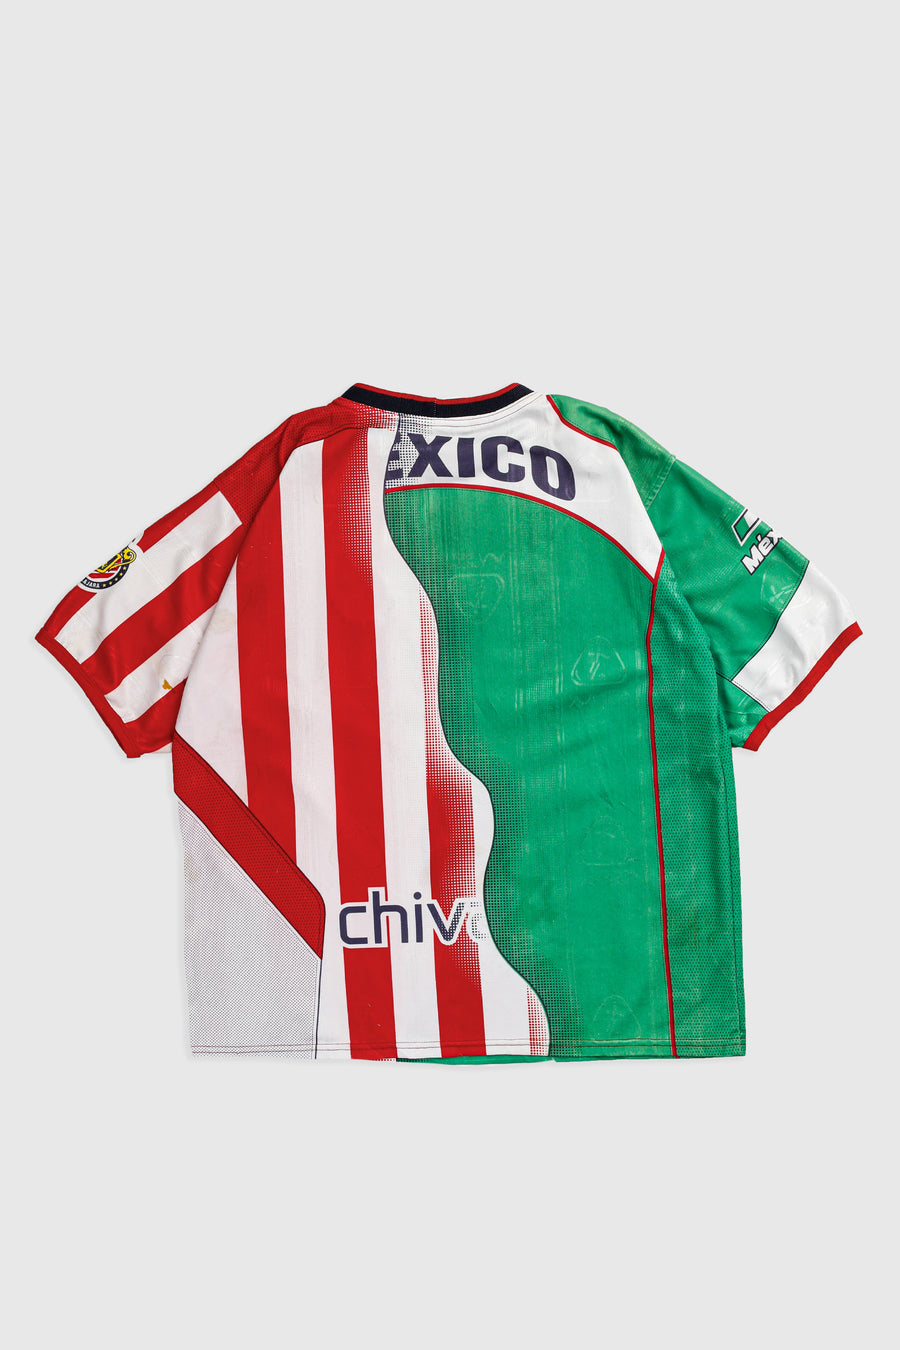 Vintage Mexico Soccer Jersey - L